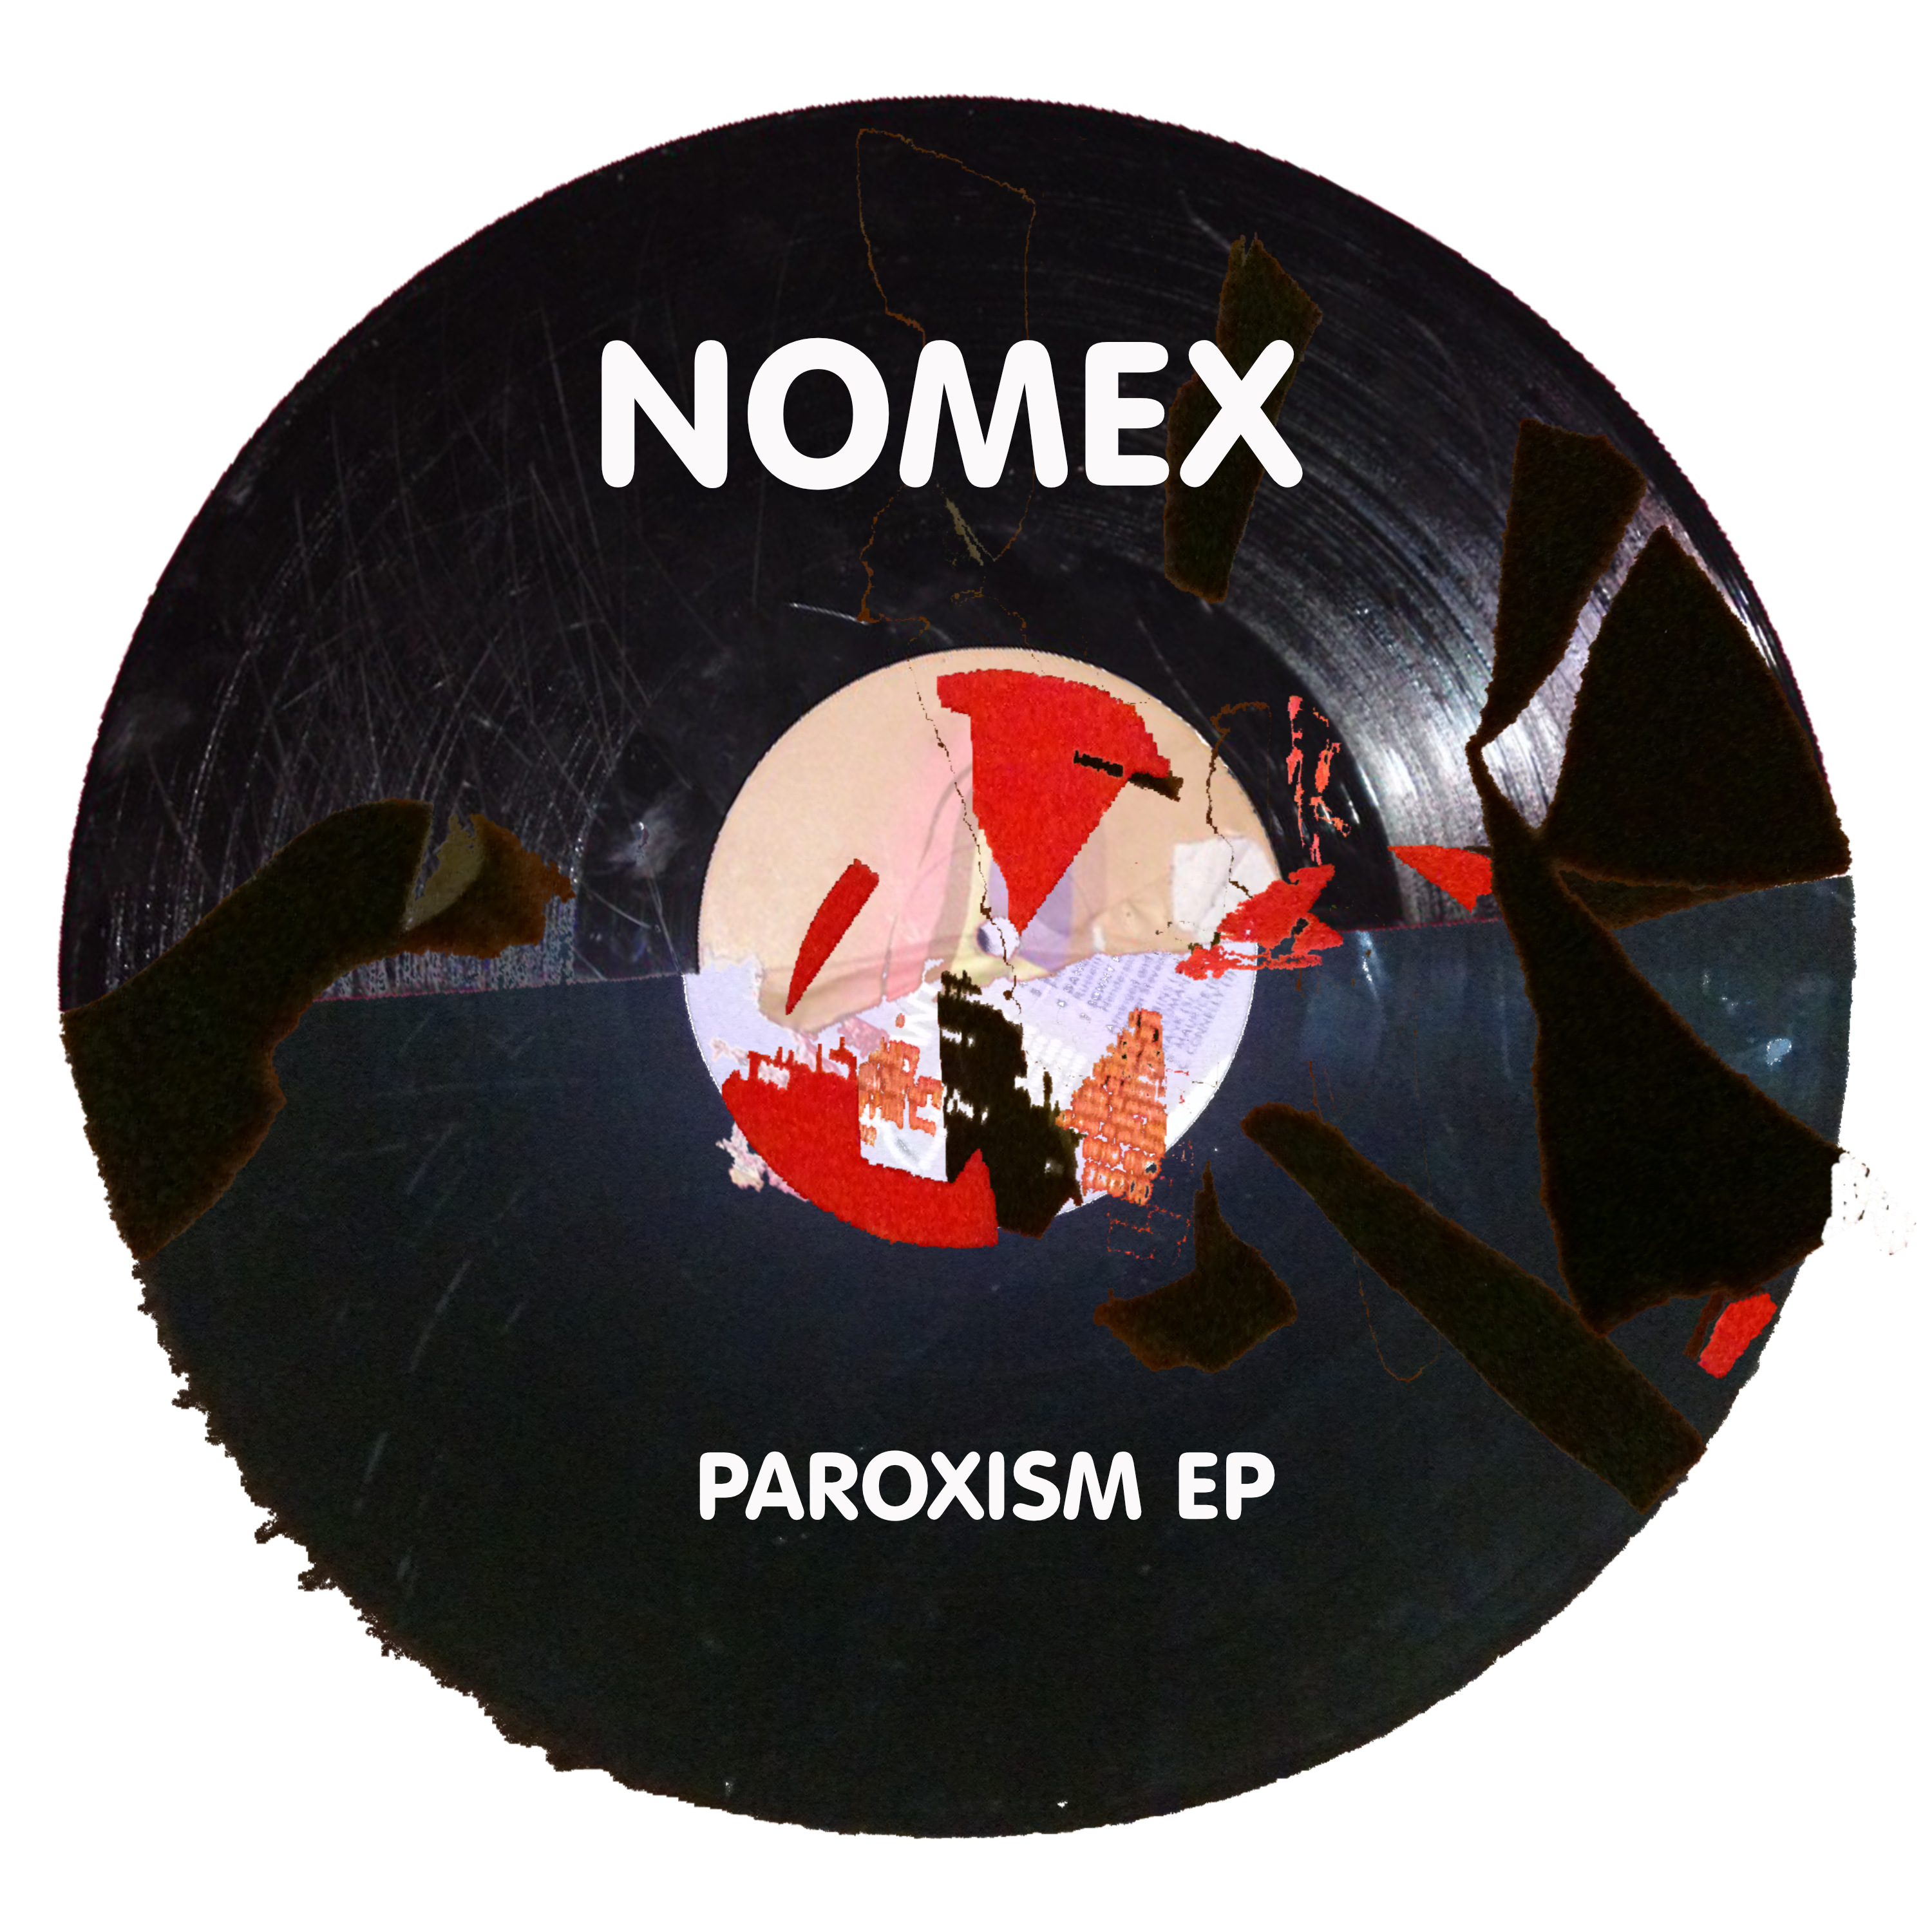 Praxis-Mock-Up-Paroxism-3